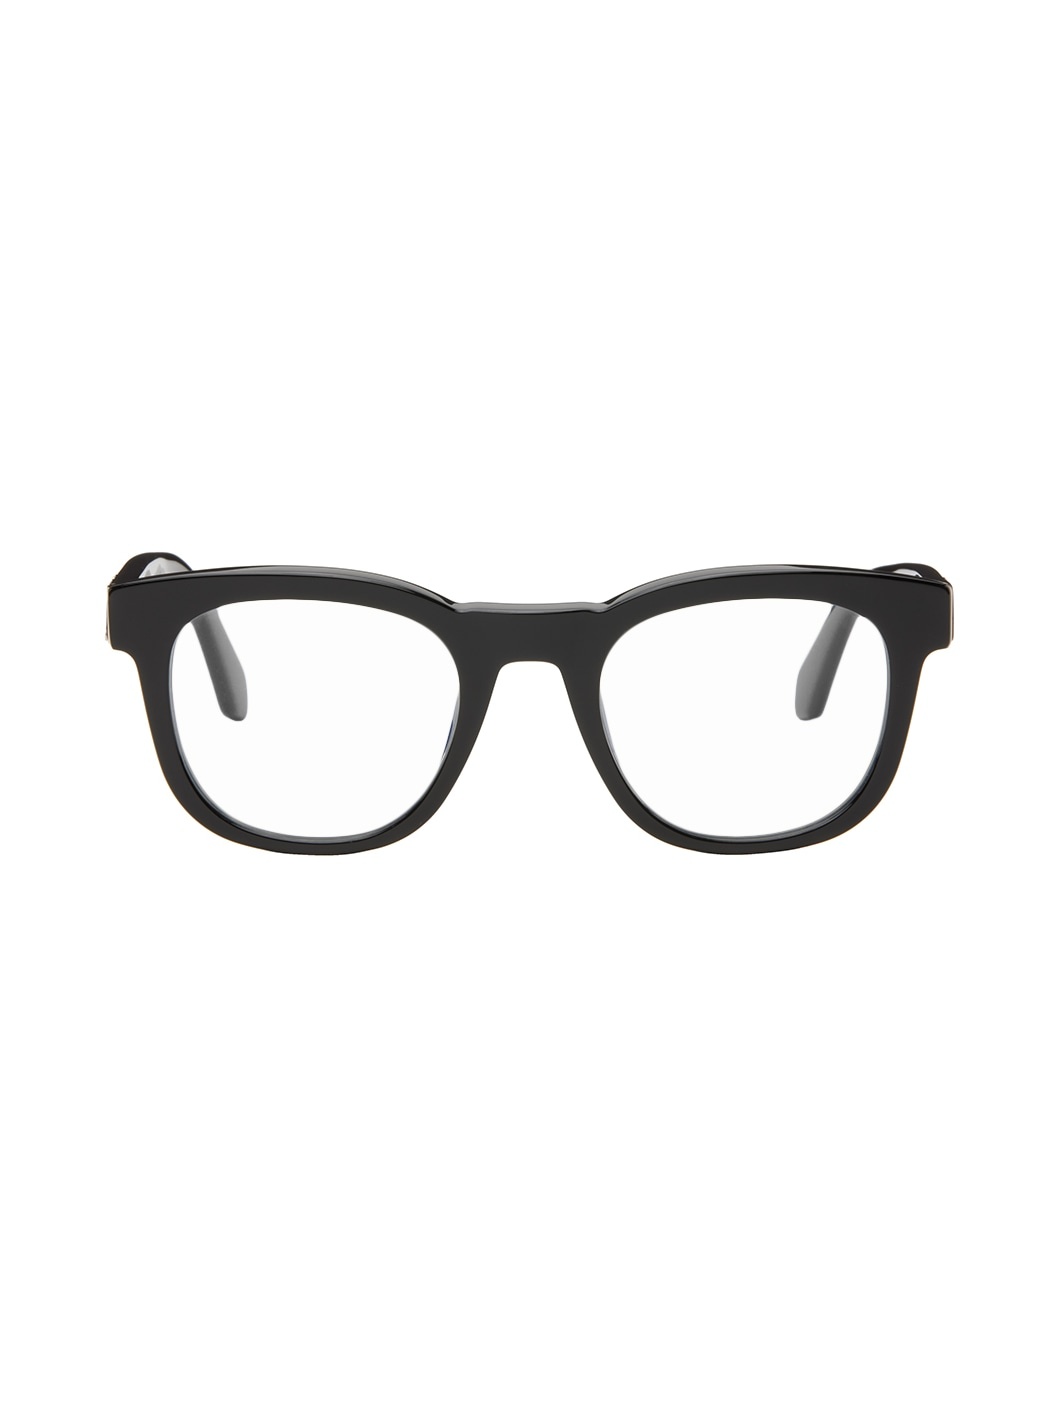 Black Optical Style 71 Glasses - 1